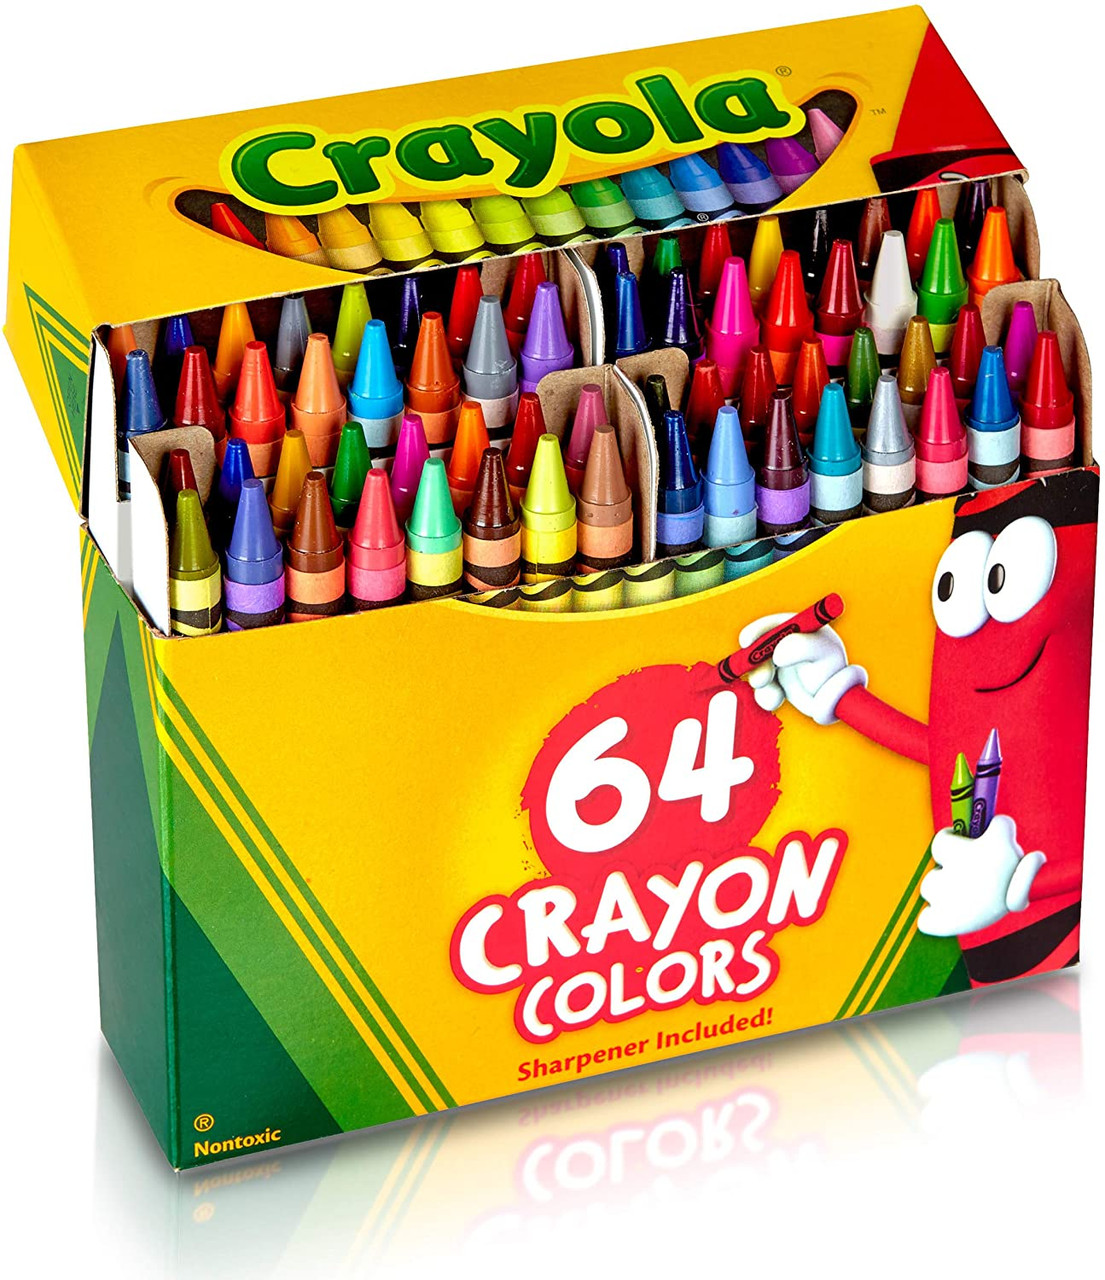 Crayola Crayons 24 Count - 2 Packs (52-3024)